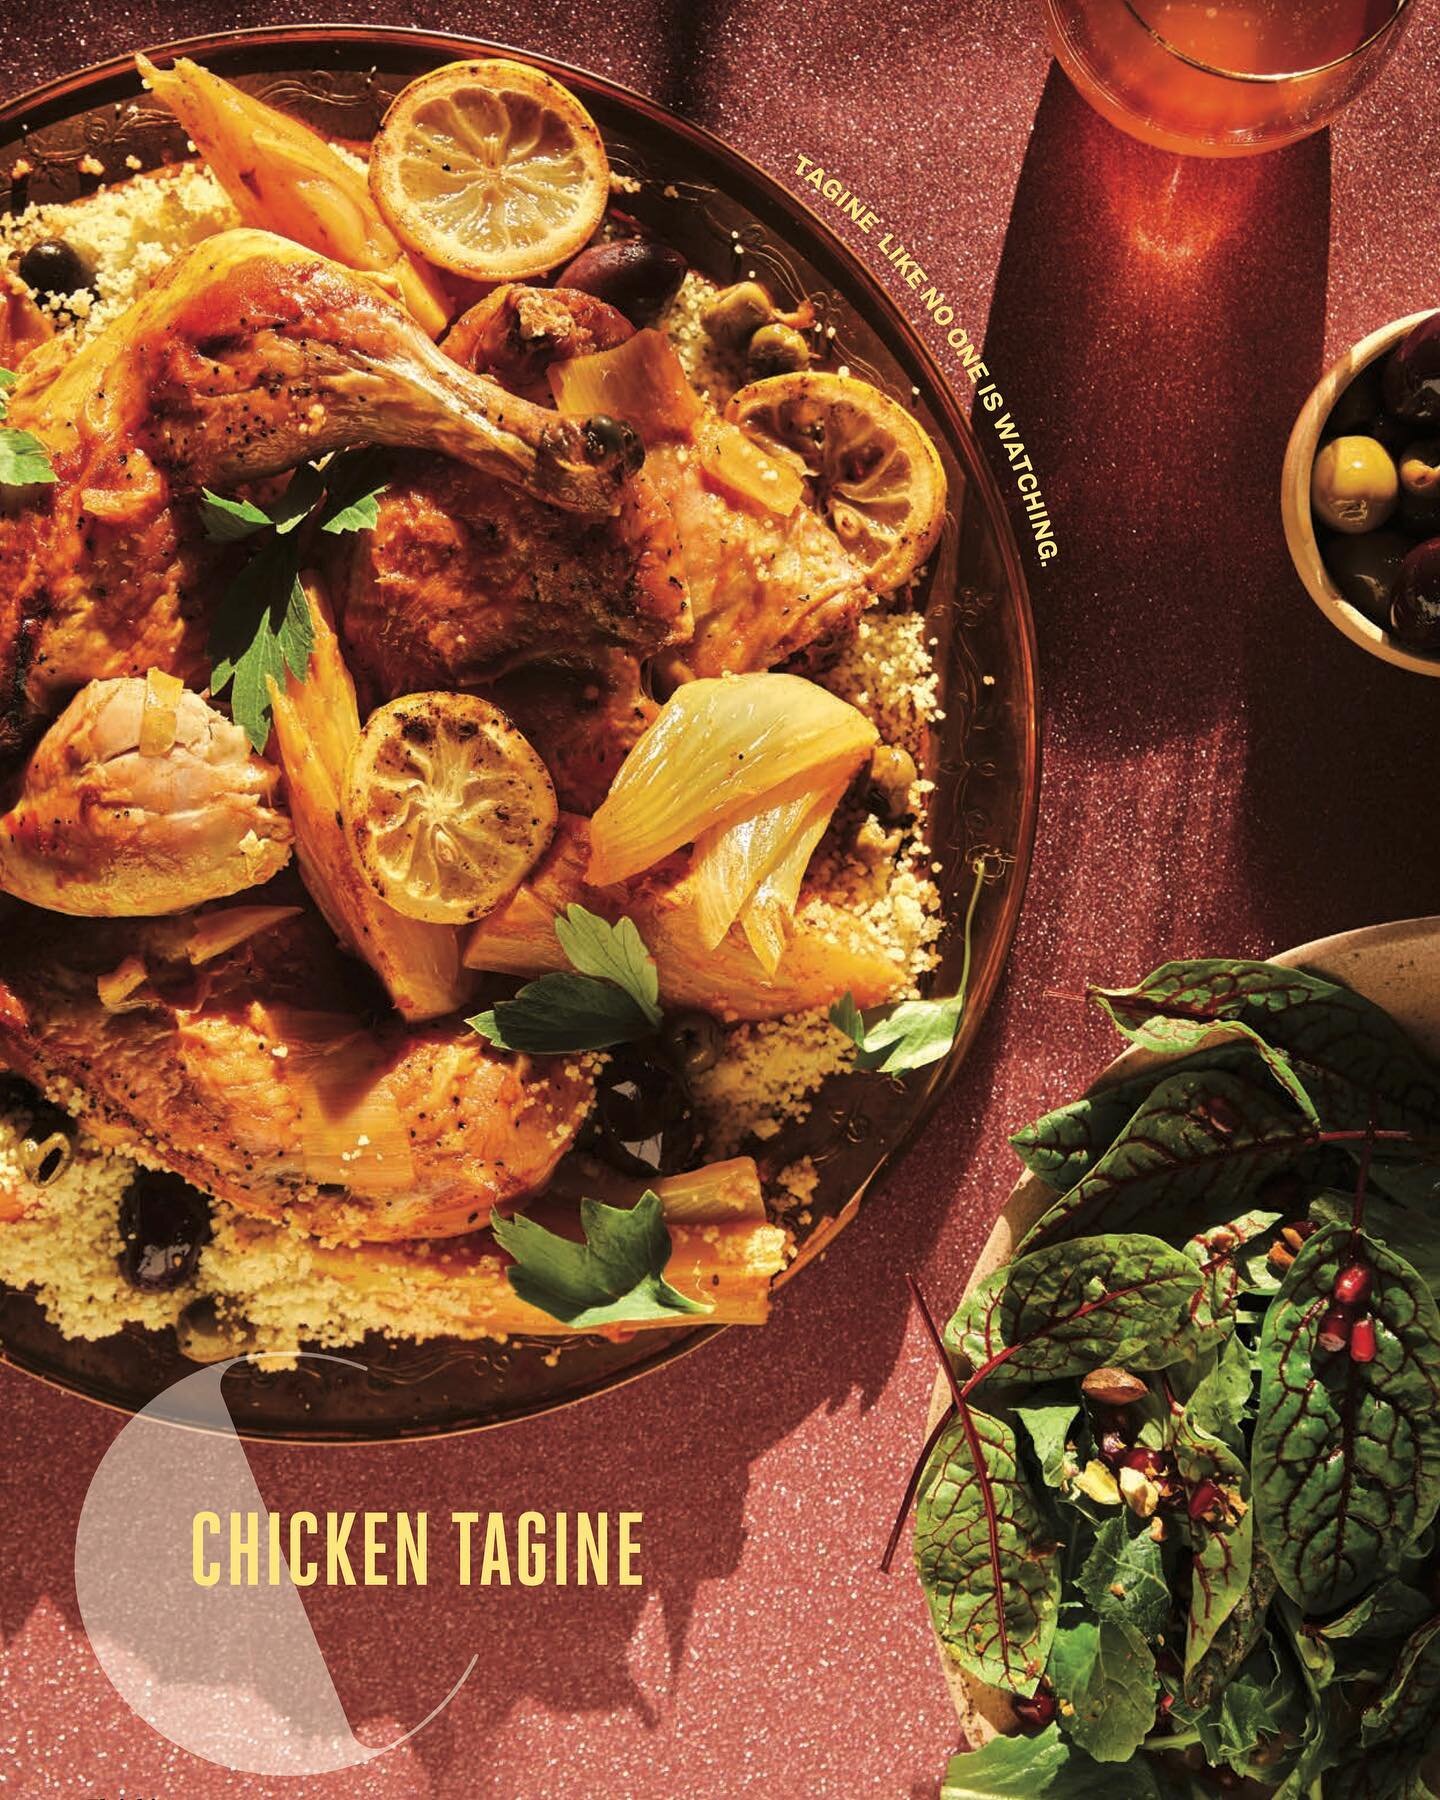 Chicken tagine under the 🌝 -
-
Shot for @fleishigsmag Issue 007
Editor in Chief/Stylist: @shifraklein -
-
#fleishigs #fleishigsmag #food #foodie #foodphotography #foodmagazine #tearsheet #chicken #tagine